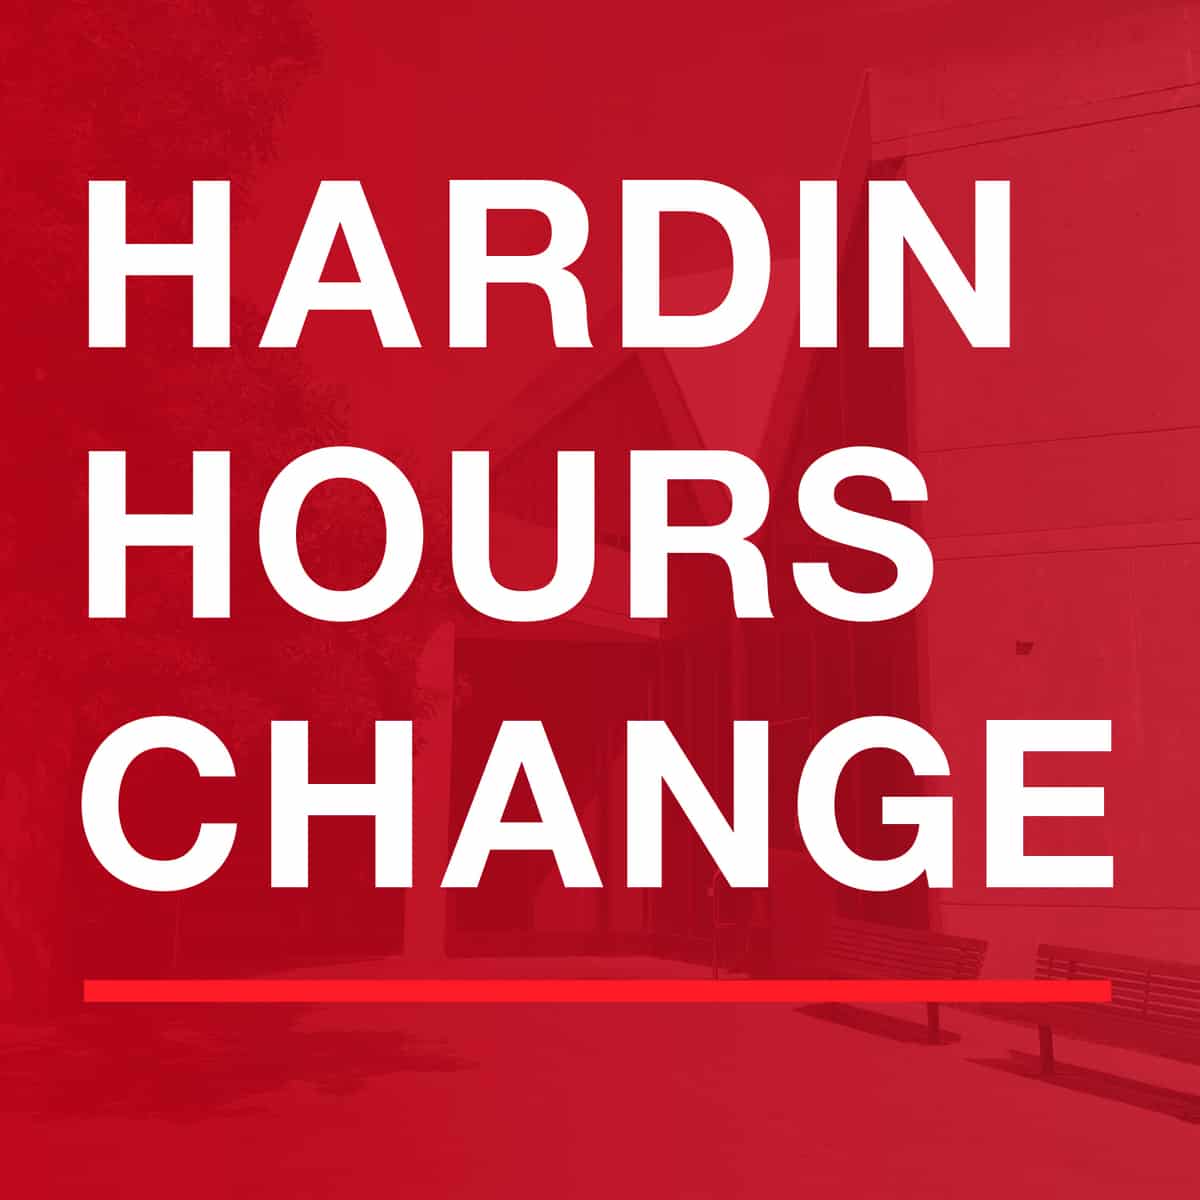 Hardin Library hours change